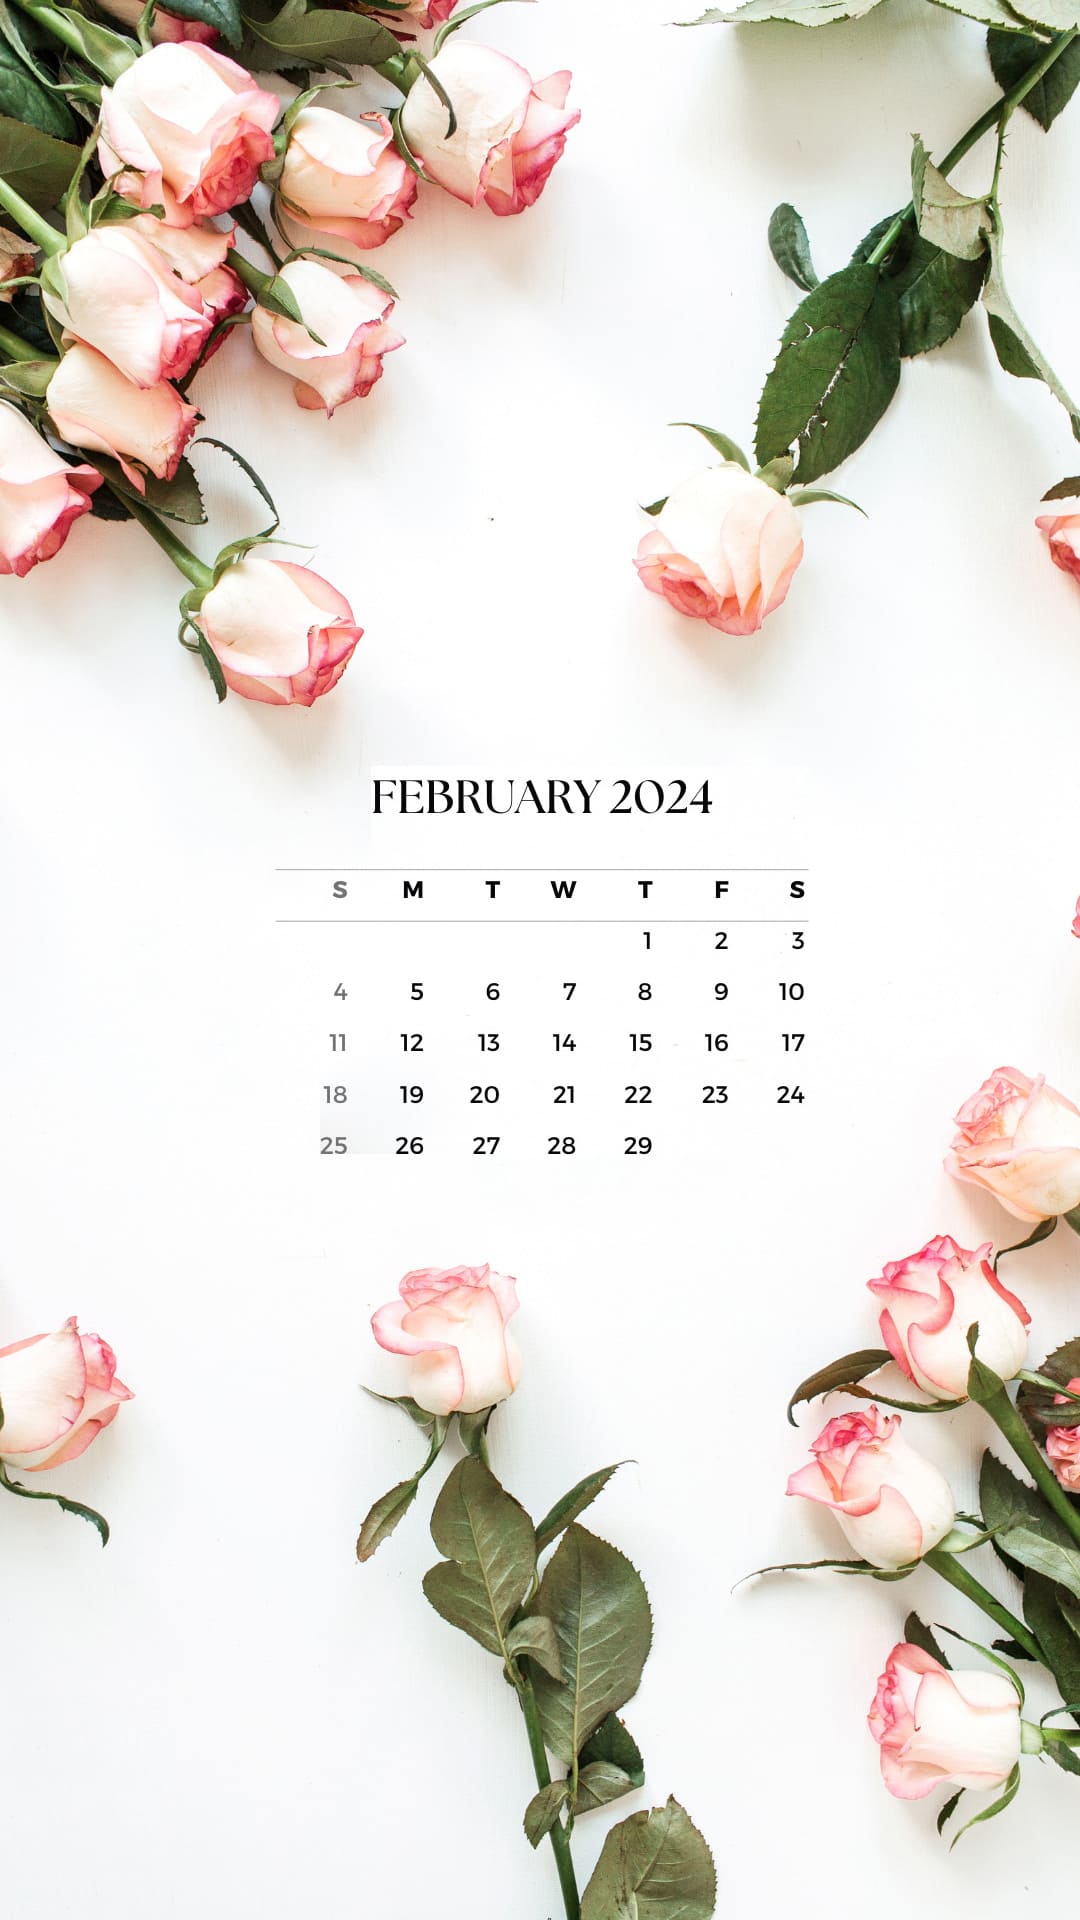 February 2024 Calendar Wallpapers